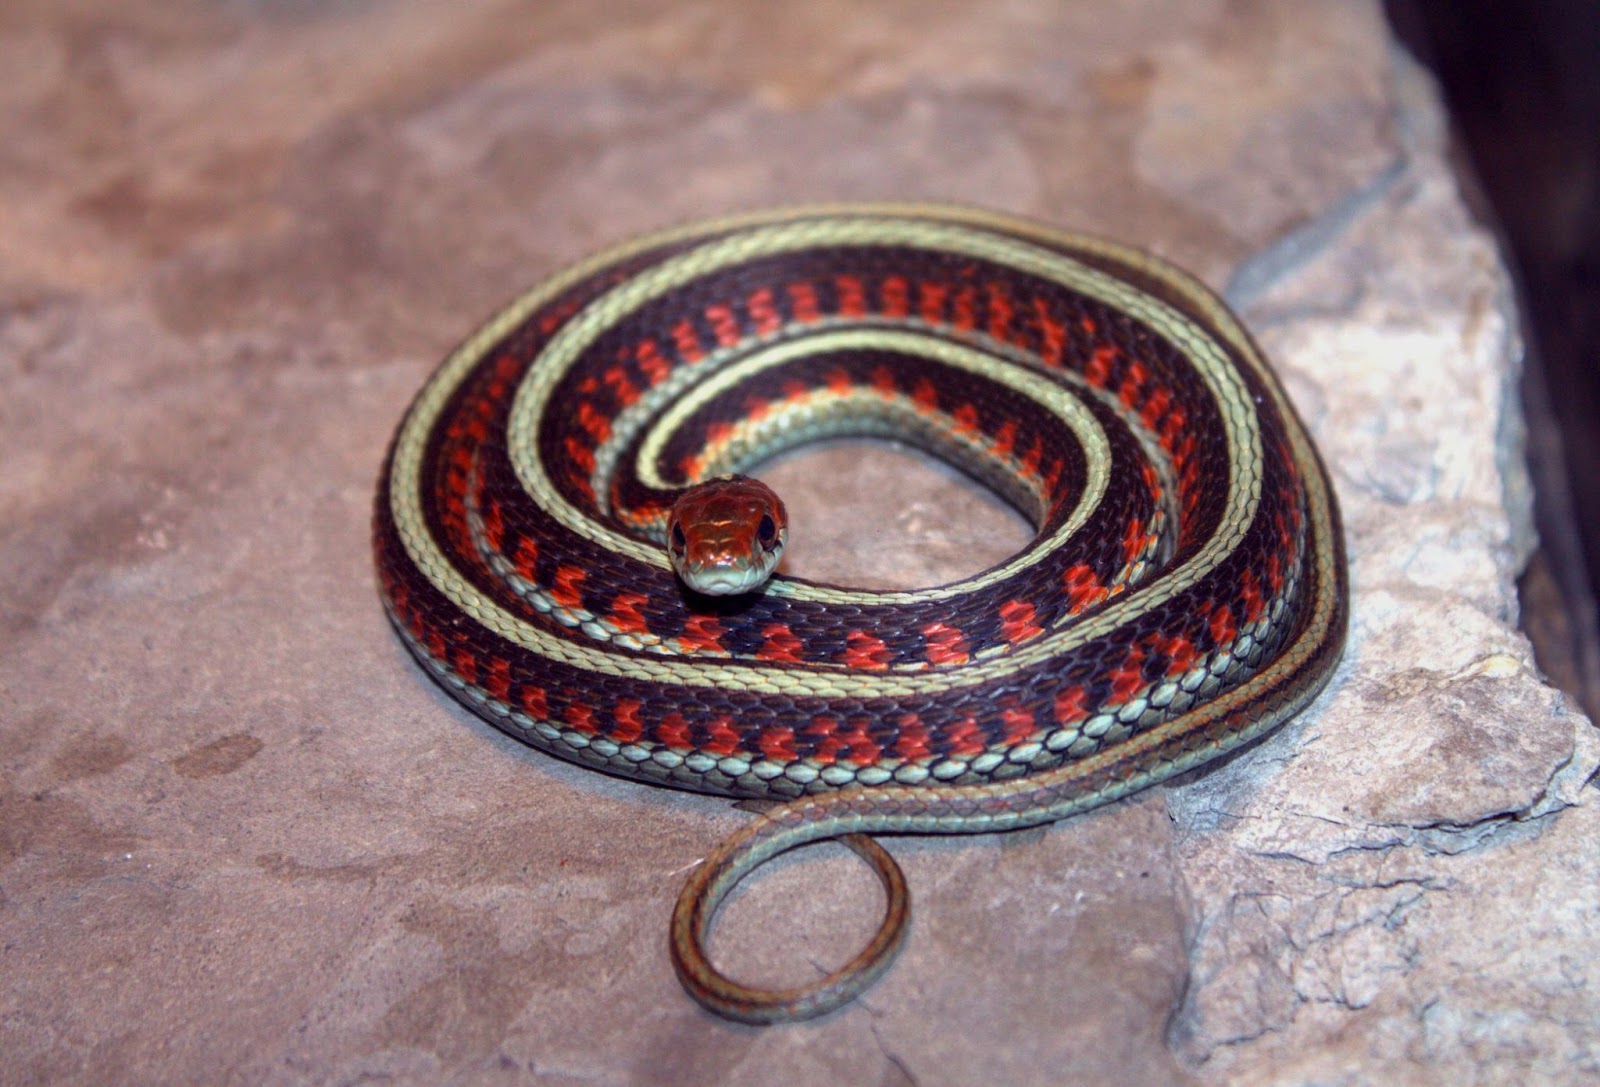 California Red Sided Garter Snakes For Sale